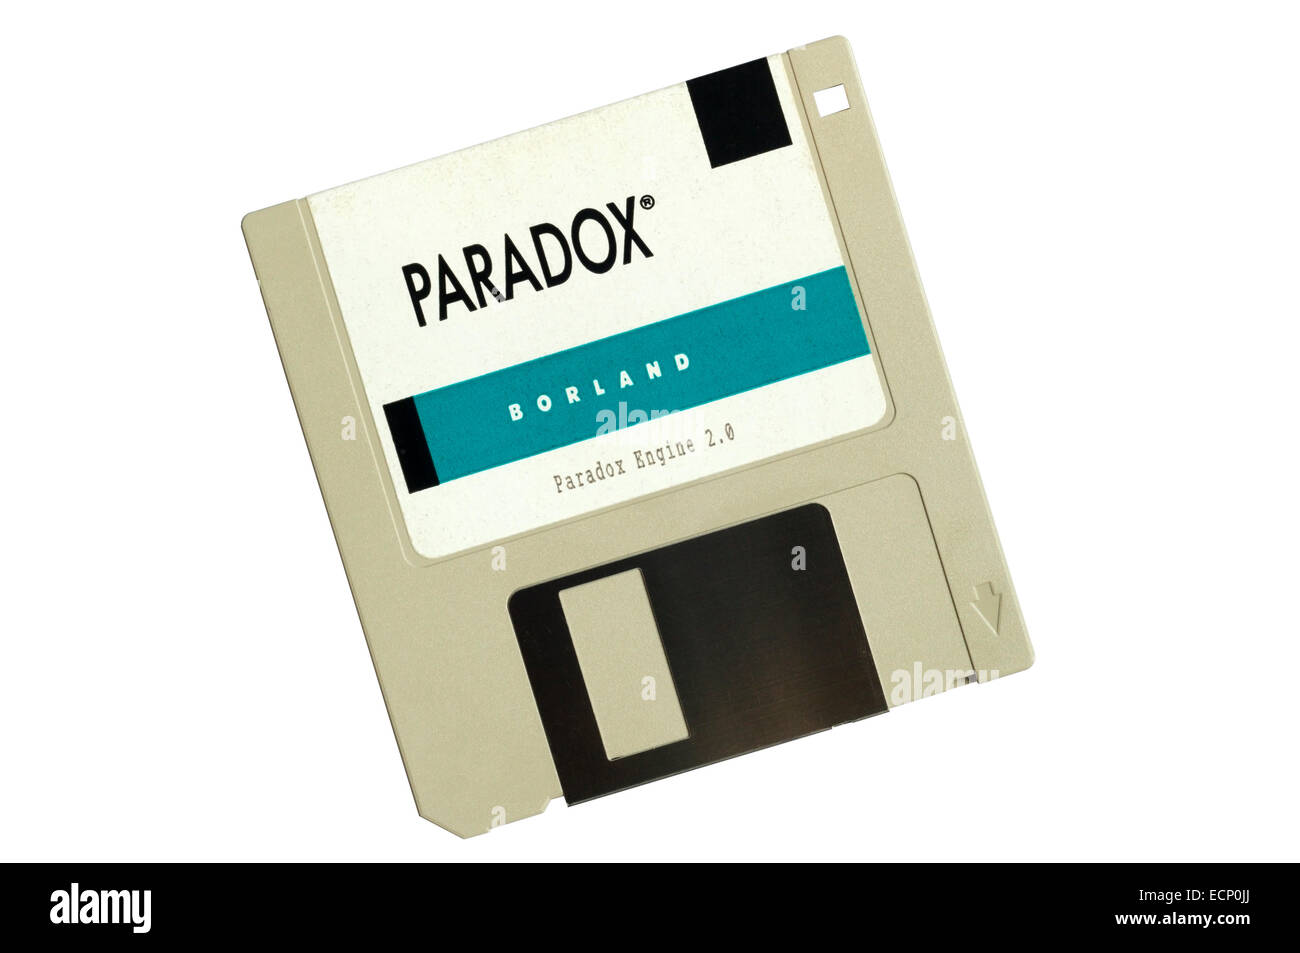 A Borland Paradox Engine 2.0 database program diskette. Stock Photo